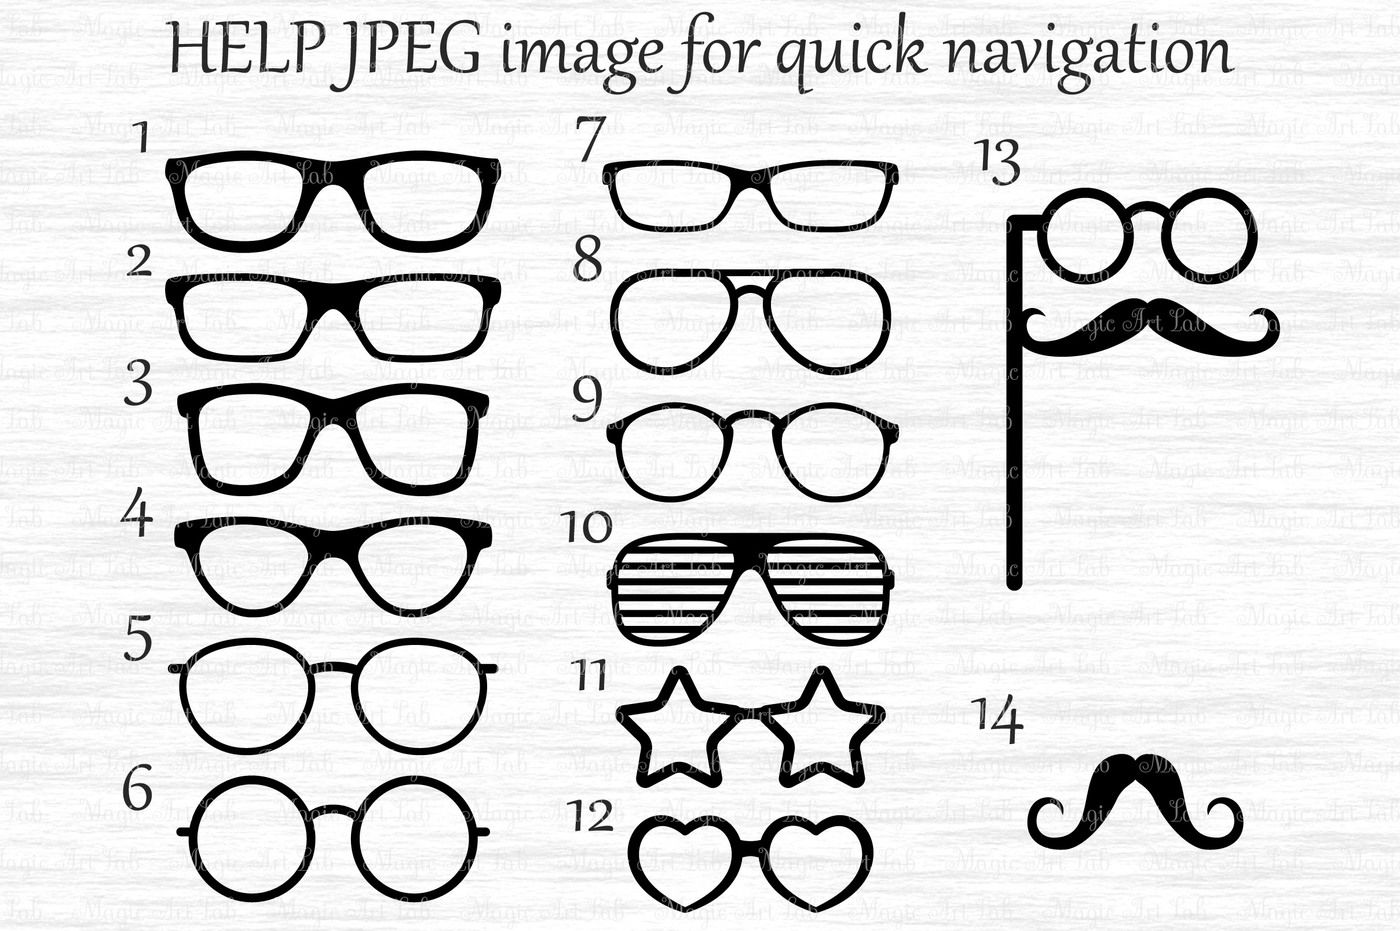 hipster glasses frames vector